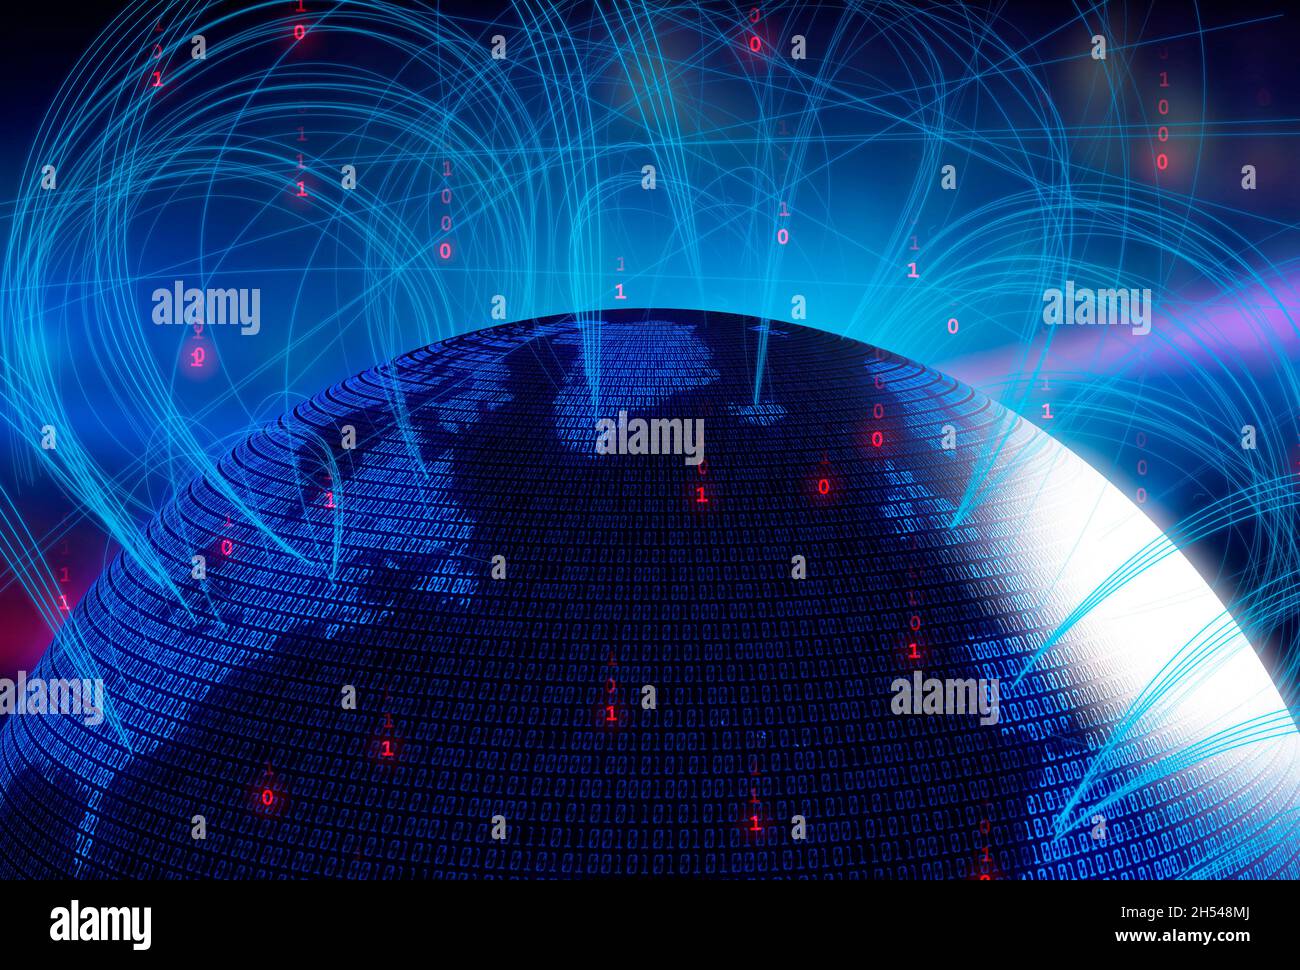 Global networks, illustration Stock Photo